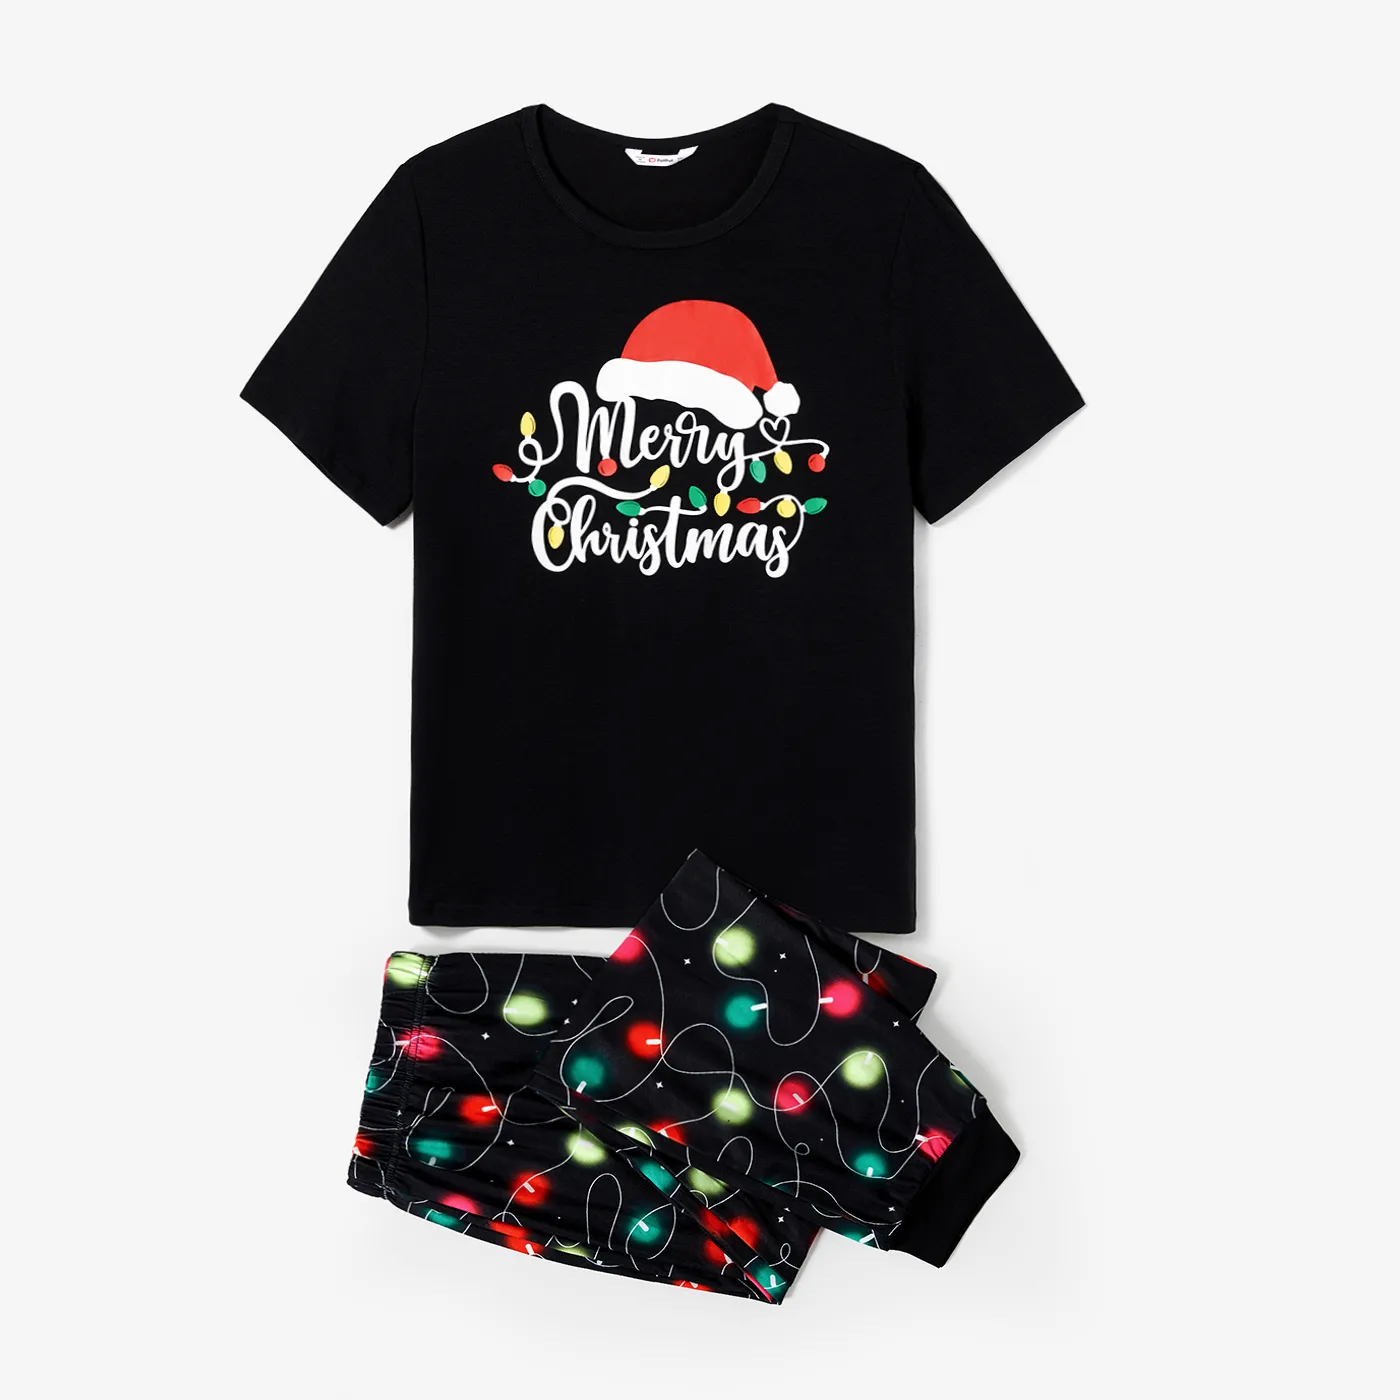 Christmas Family Matching Letter &Festive light bulb Print Short-sleeve Pajamas Sets(Flame resistant